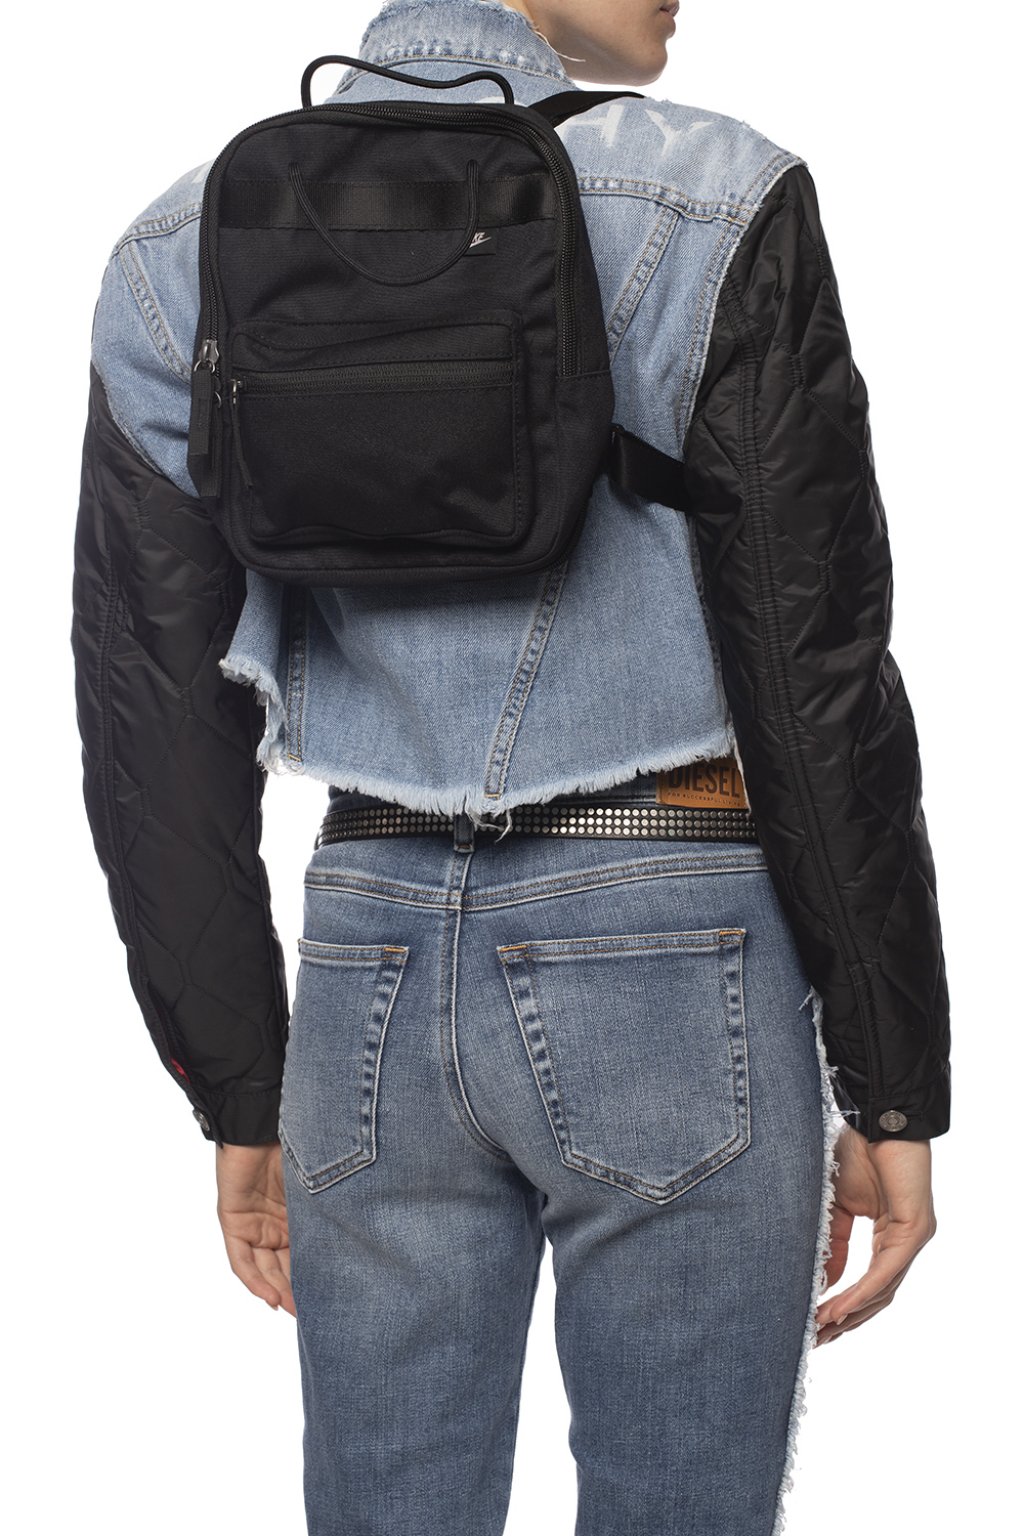 nike black tanjun backpack